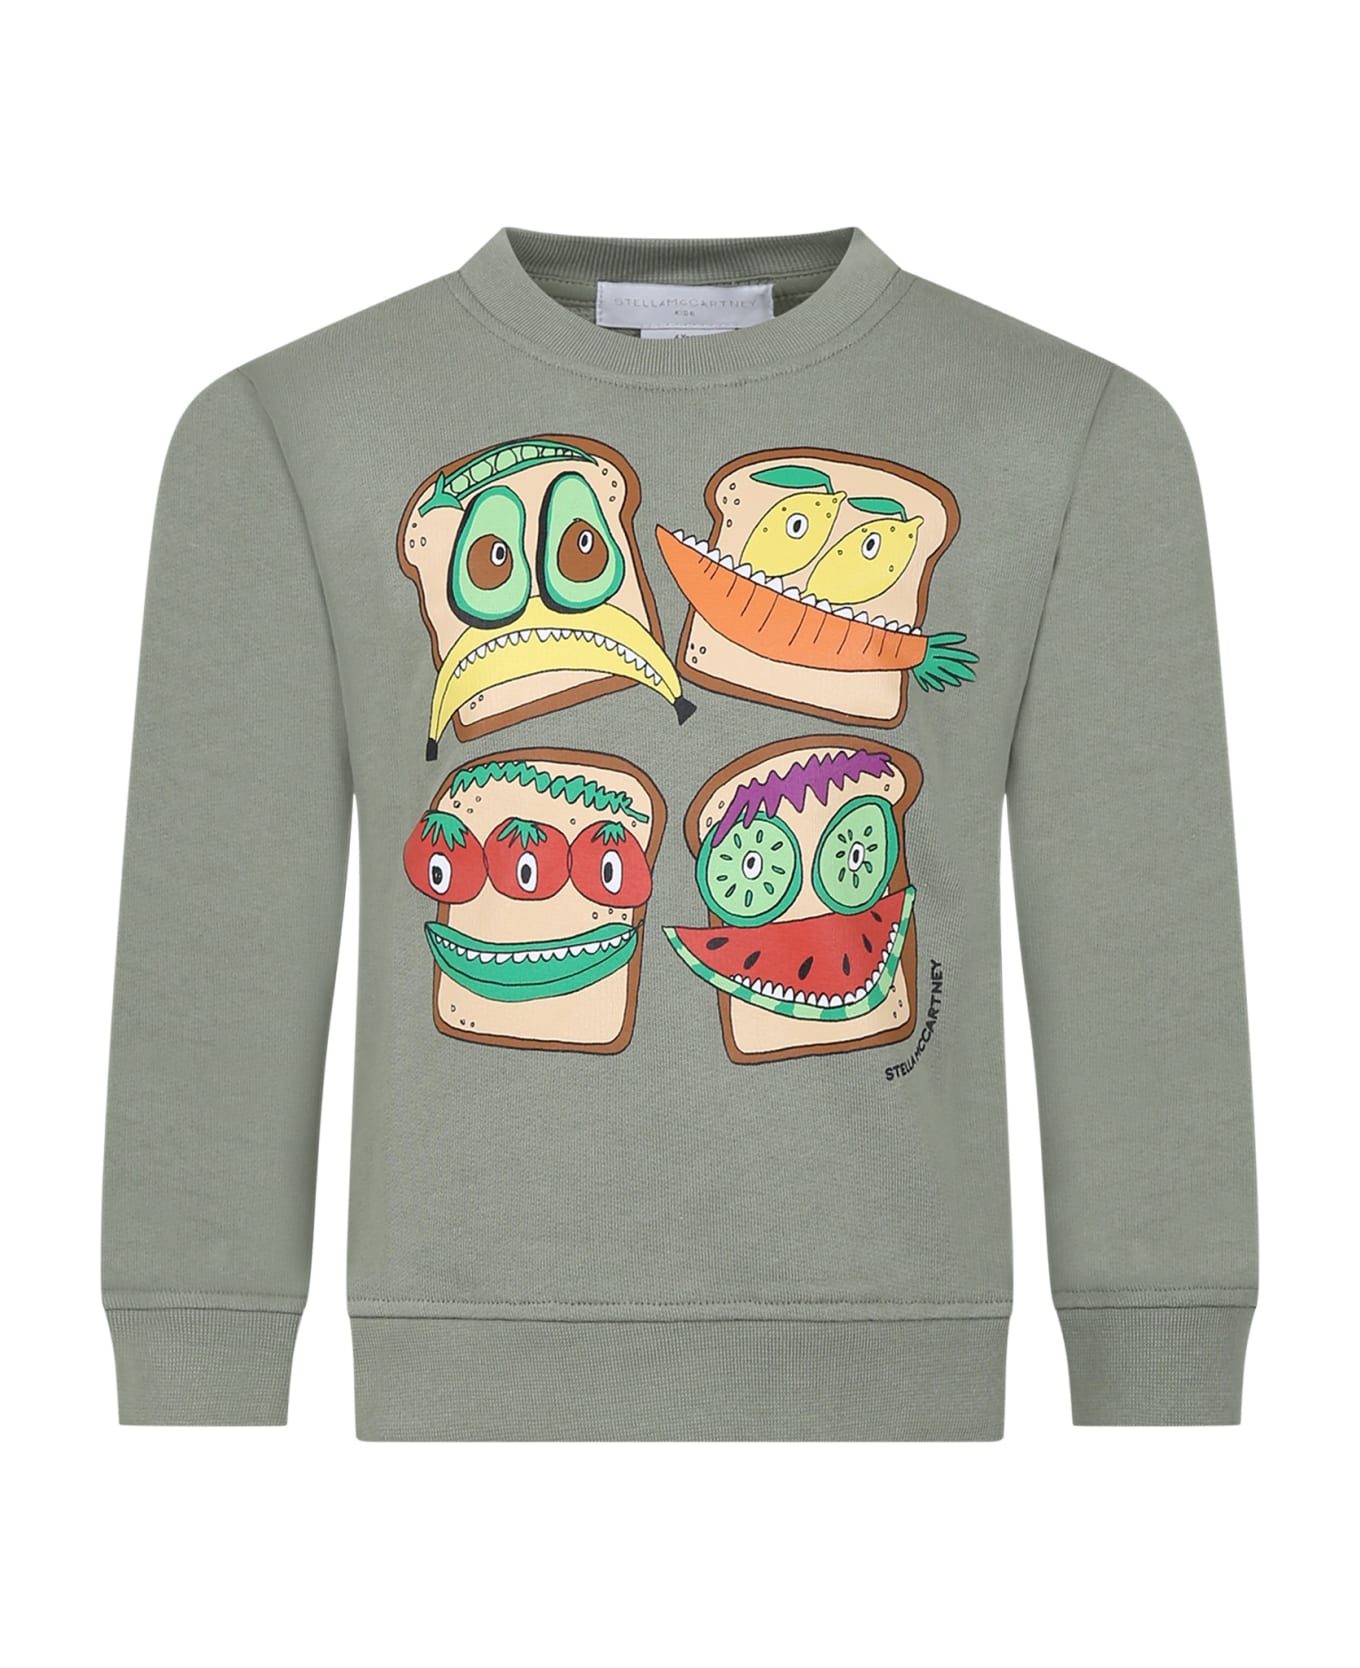 Stella McCartney Green Sweatshirt For Boy With Toast Print - Verde